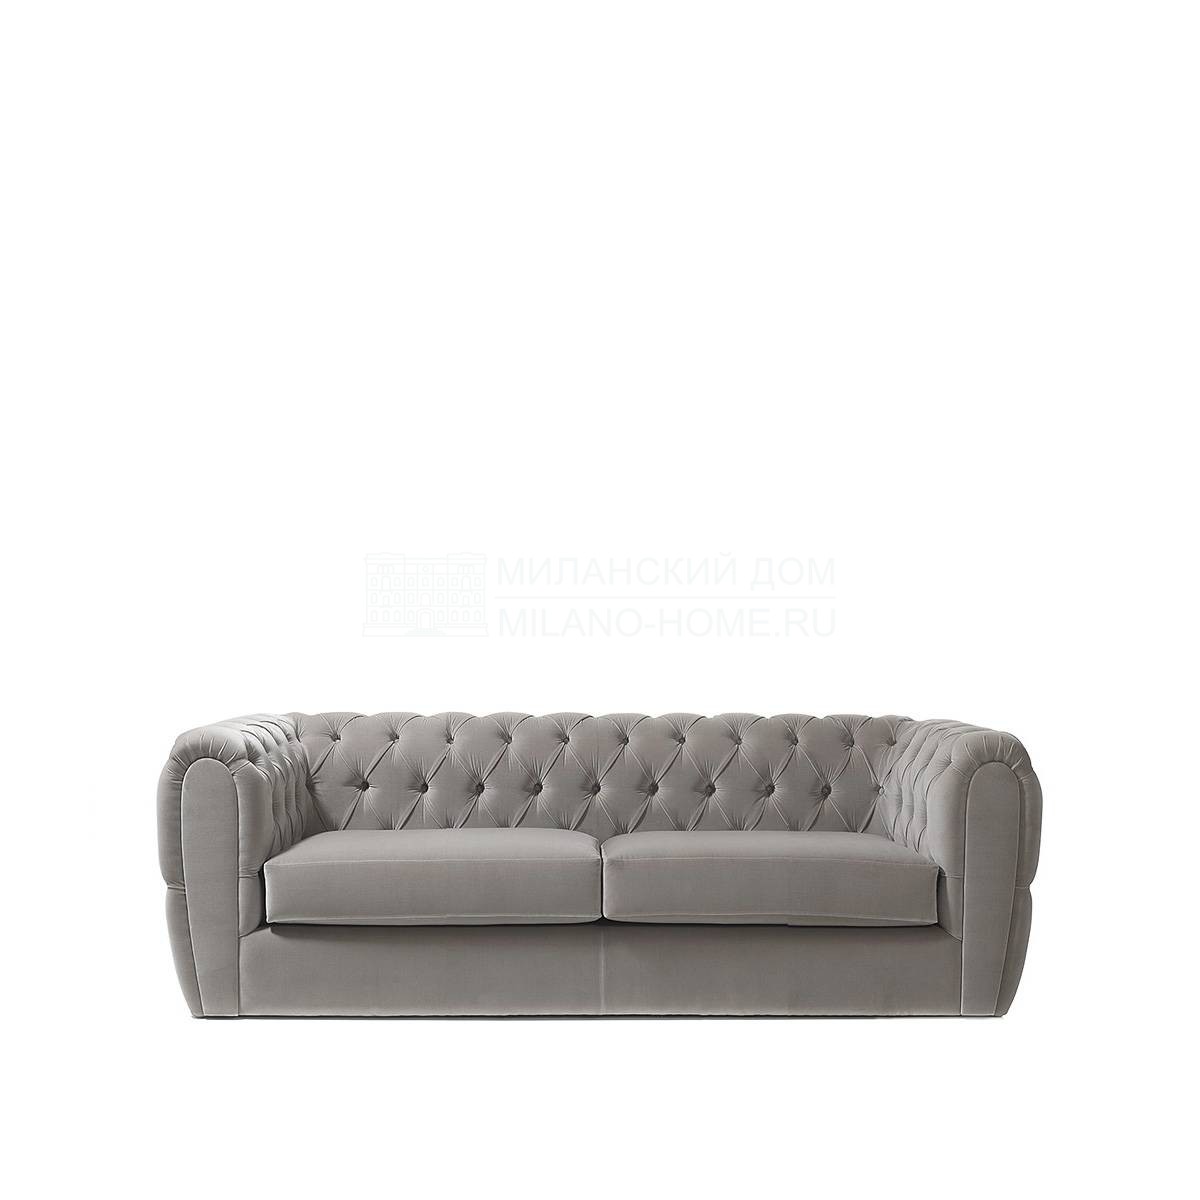 Прямой диван Nimes sofa из Испании фабрики COLECCION ALEXANDRA